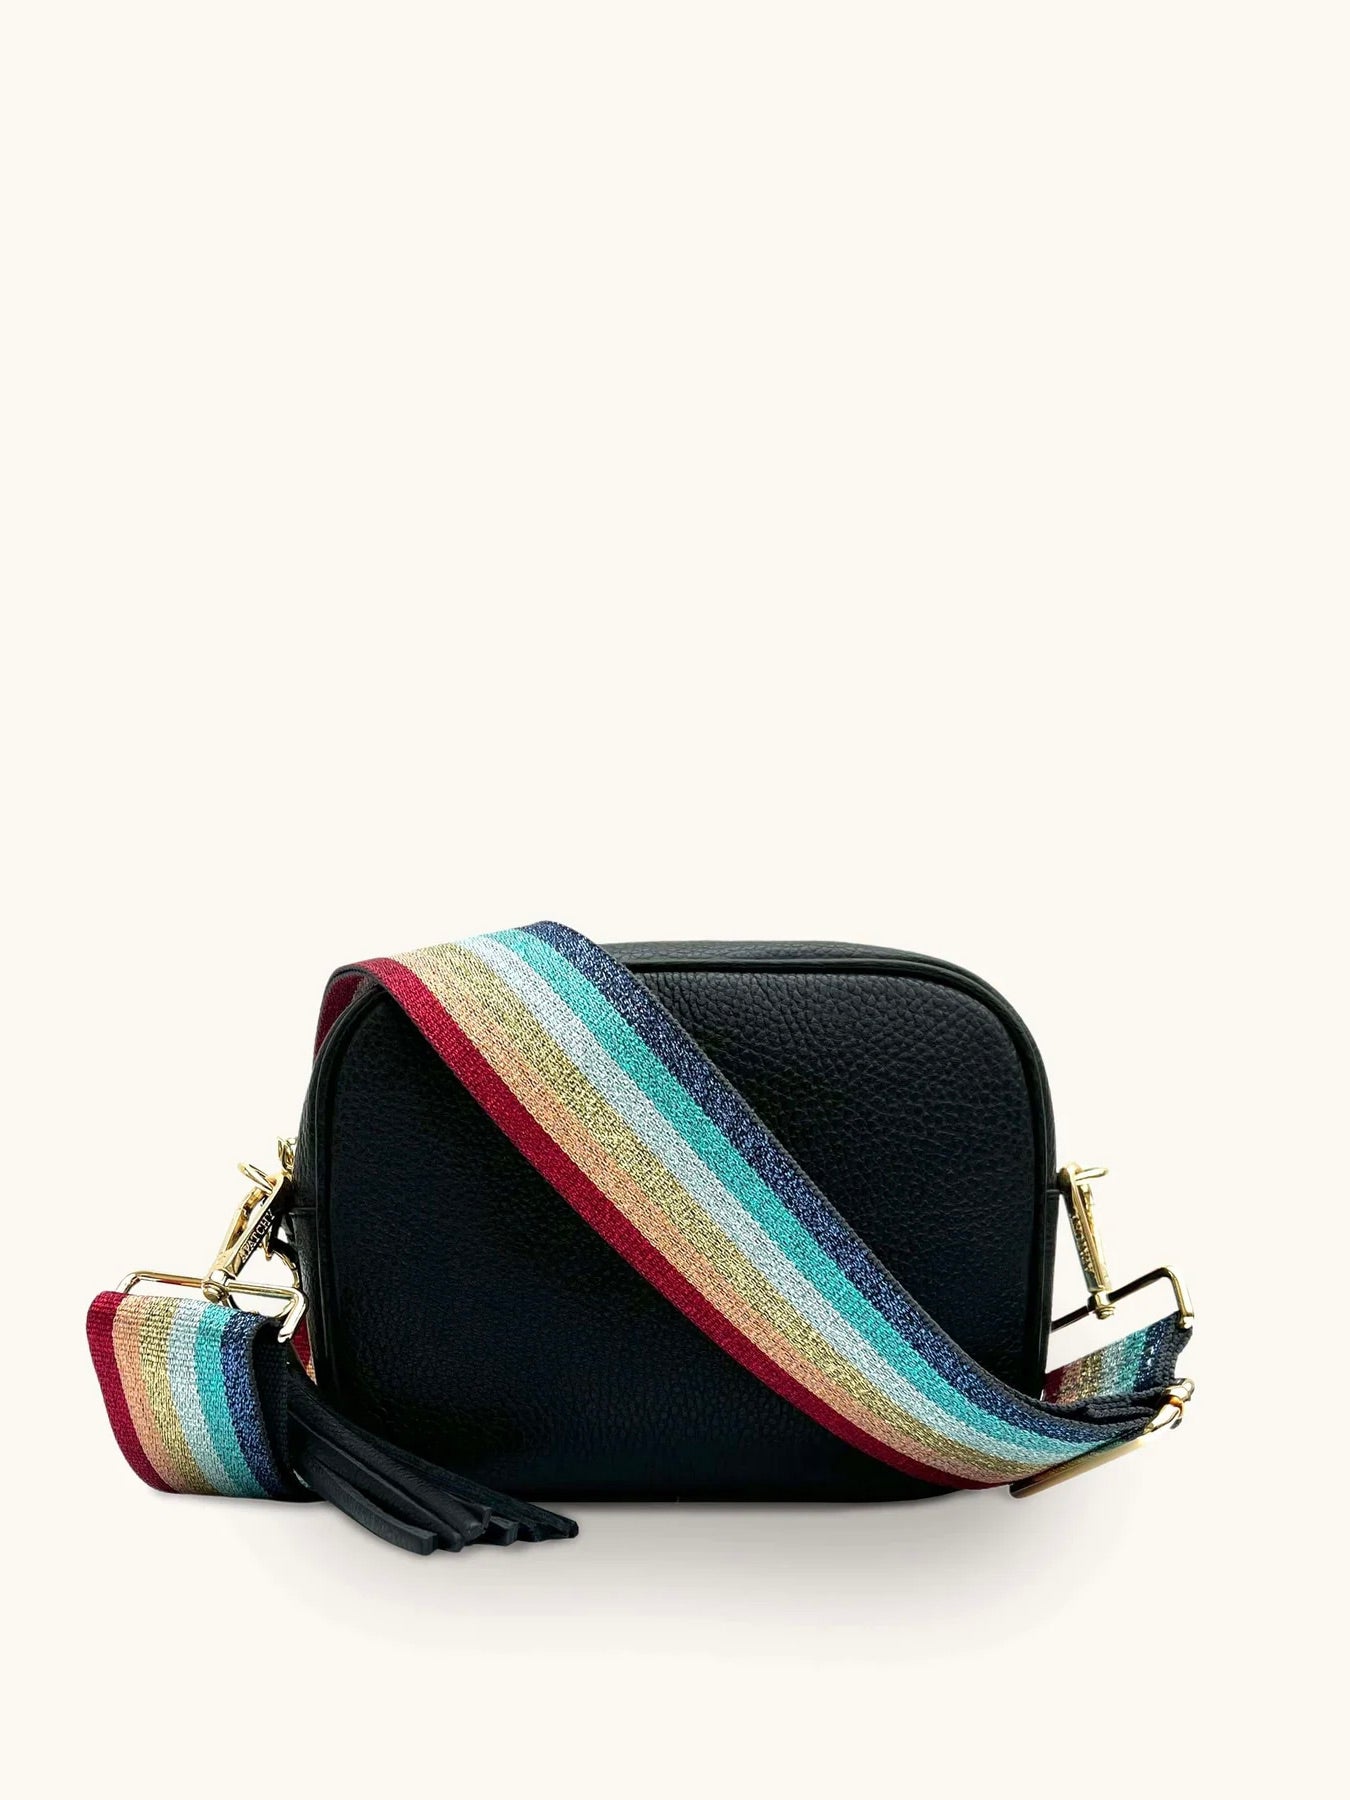 Tassel Bag Black Rainbow Strap